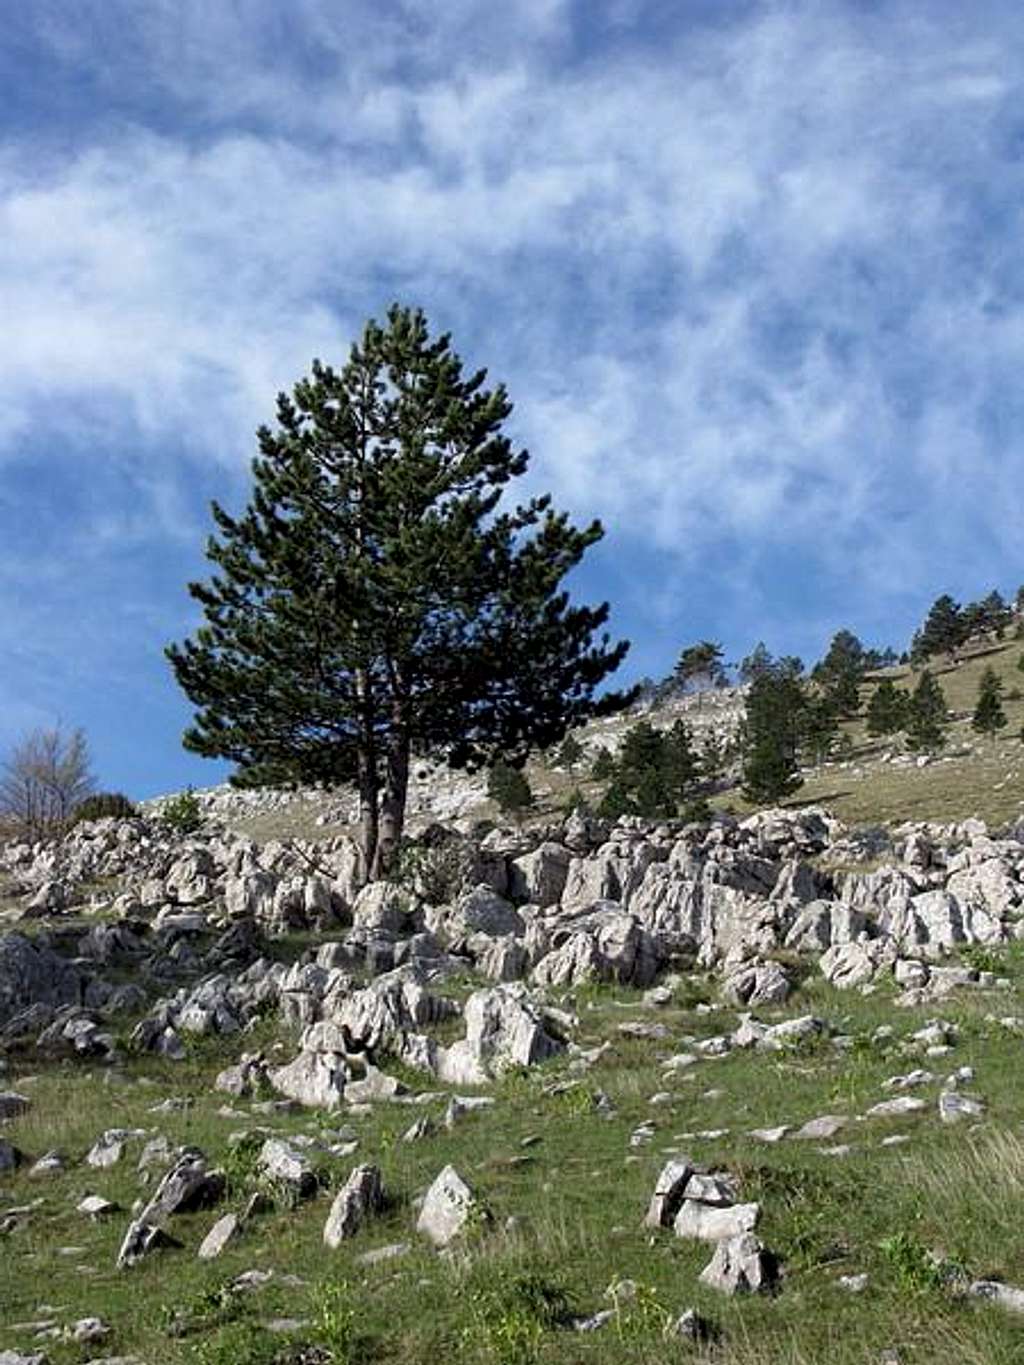 Scenery from the slopes of Badanj peak